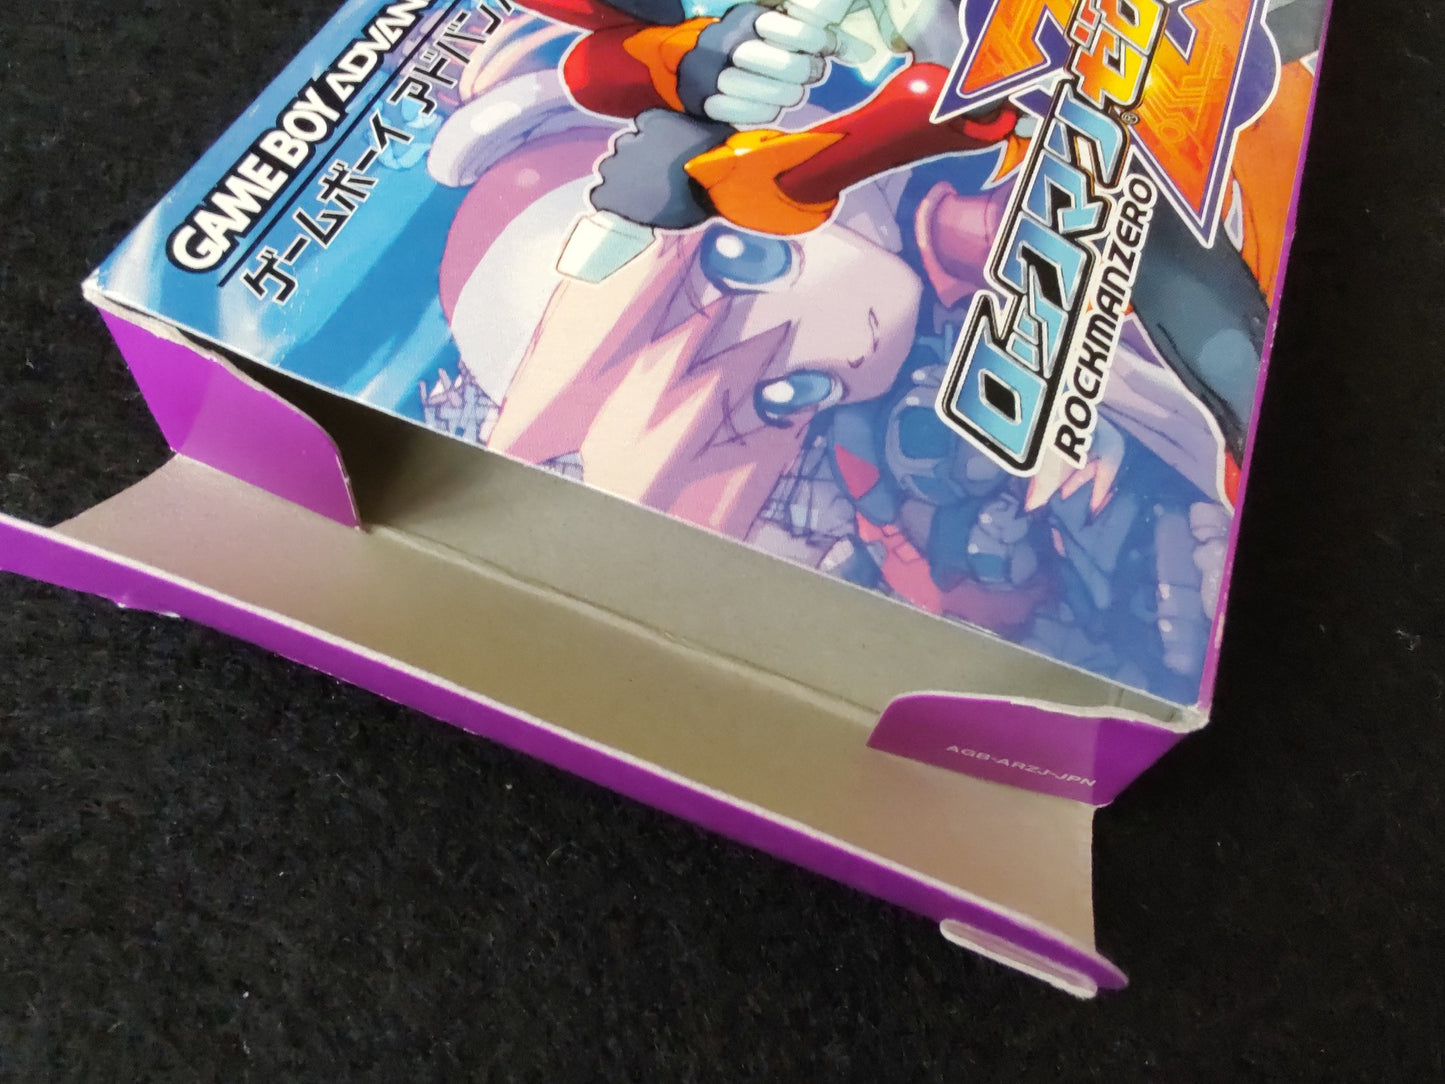 ROCKMAN ZERO Megaman Gameboy Advance GBA w/Manual and Box, working-f0906-2